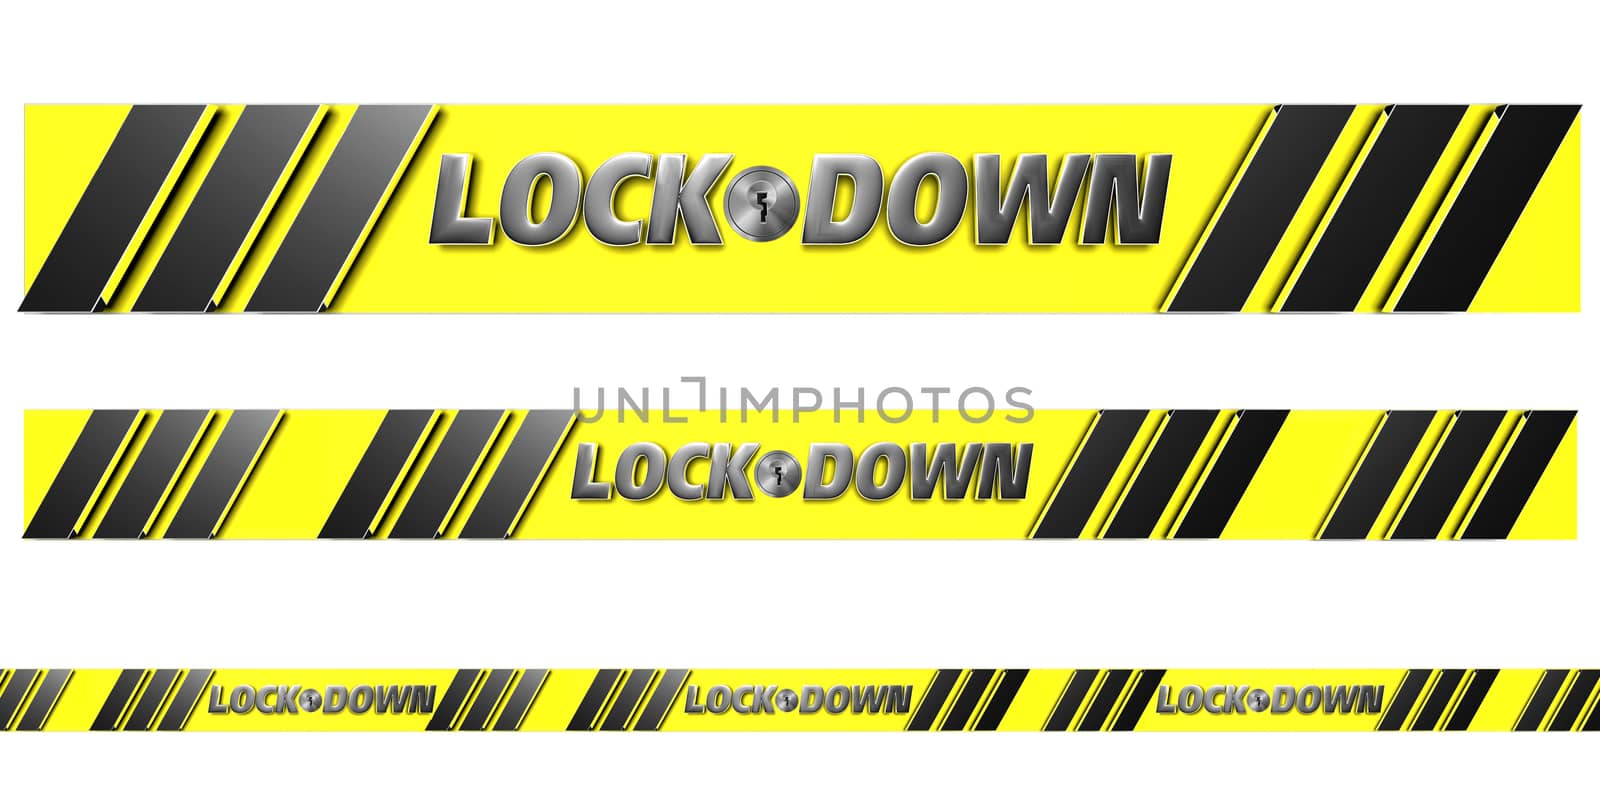 Lockdown 3d. by thitimontoyai